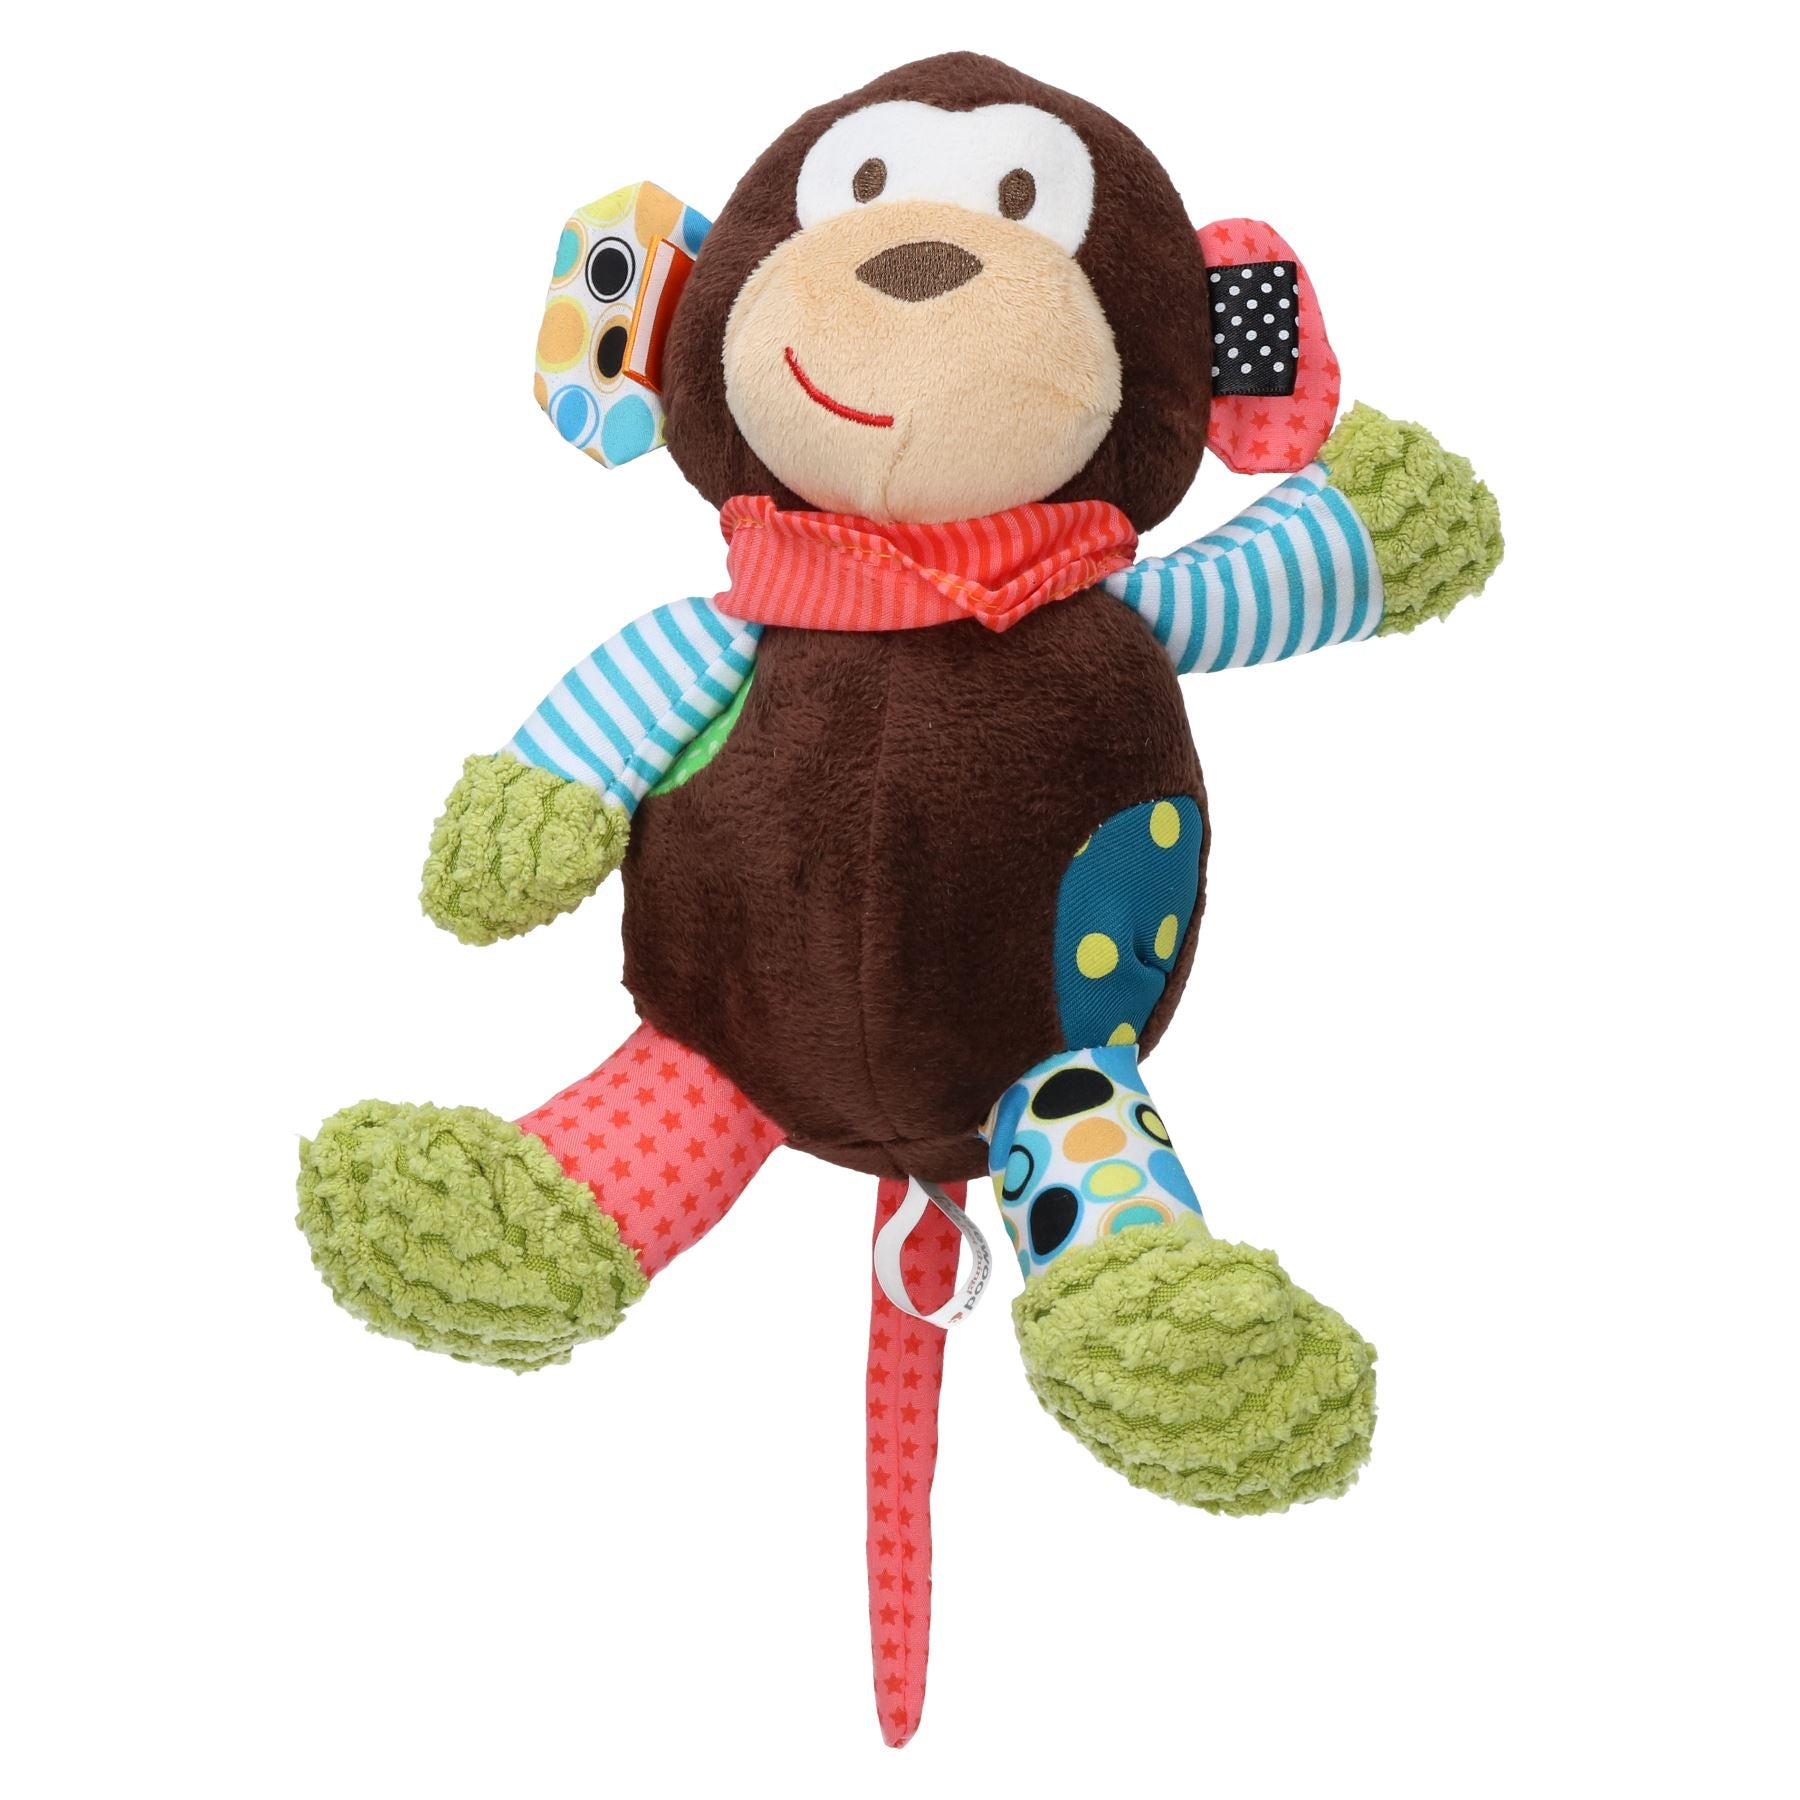 Mitchell Monkey Comfort Dog Toy With Squeak 25cm/10"